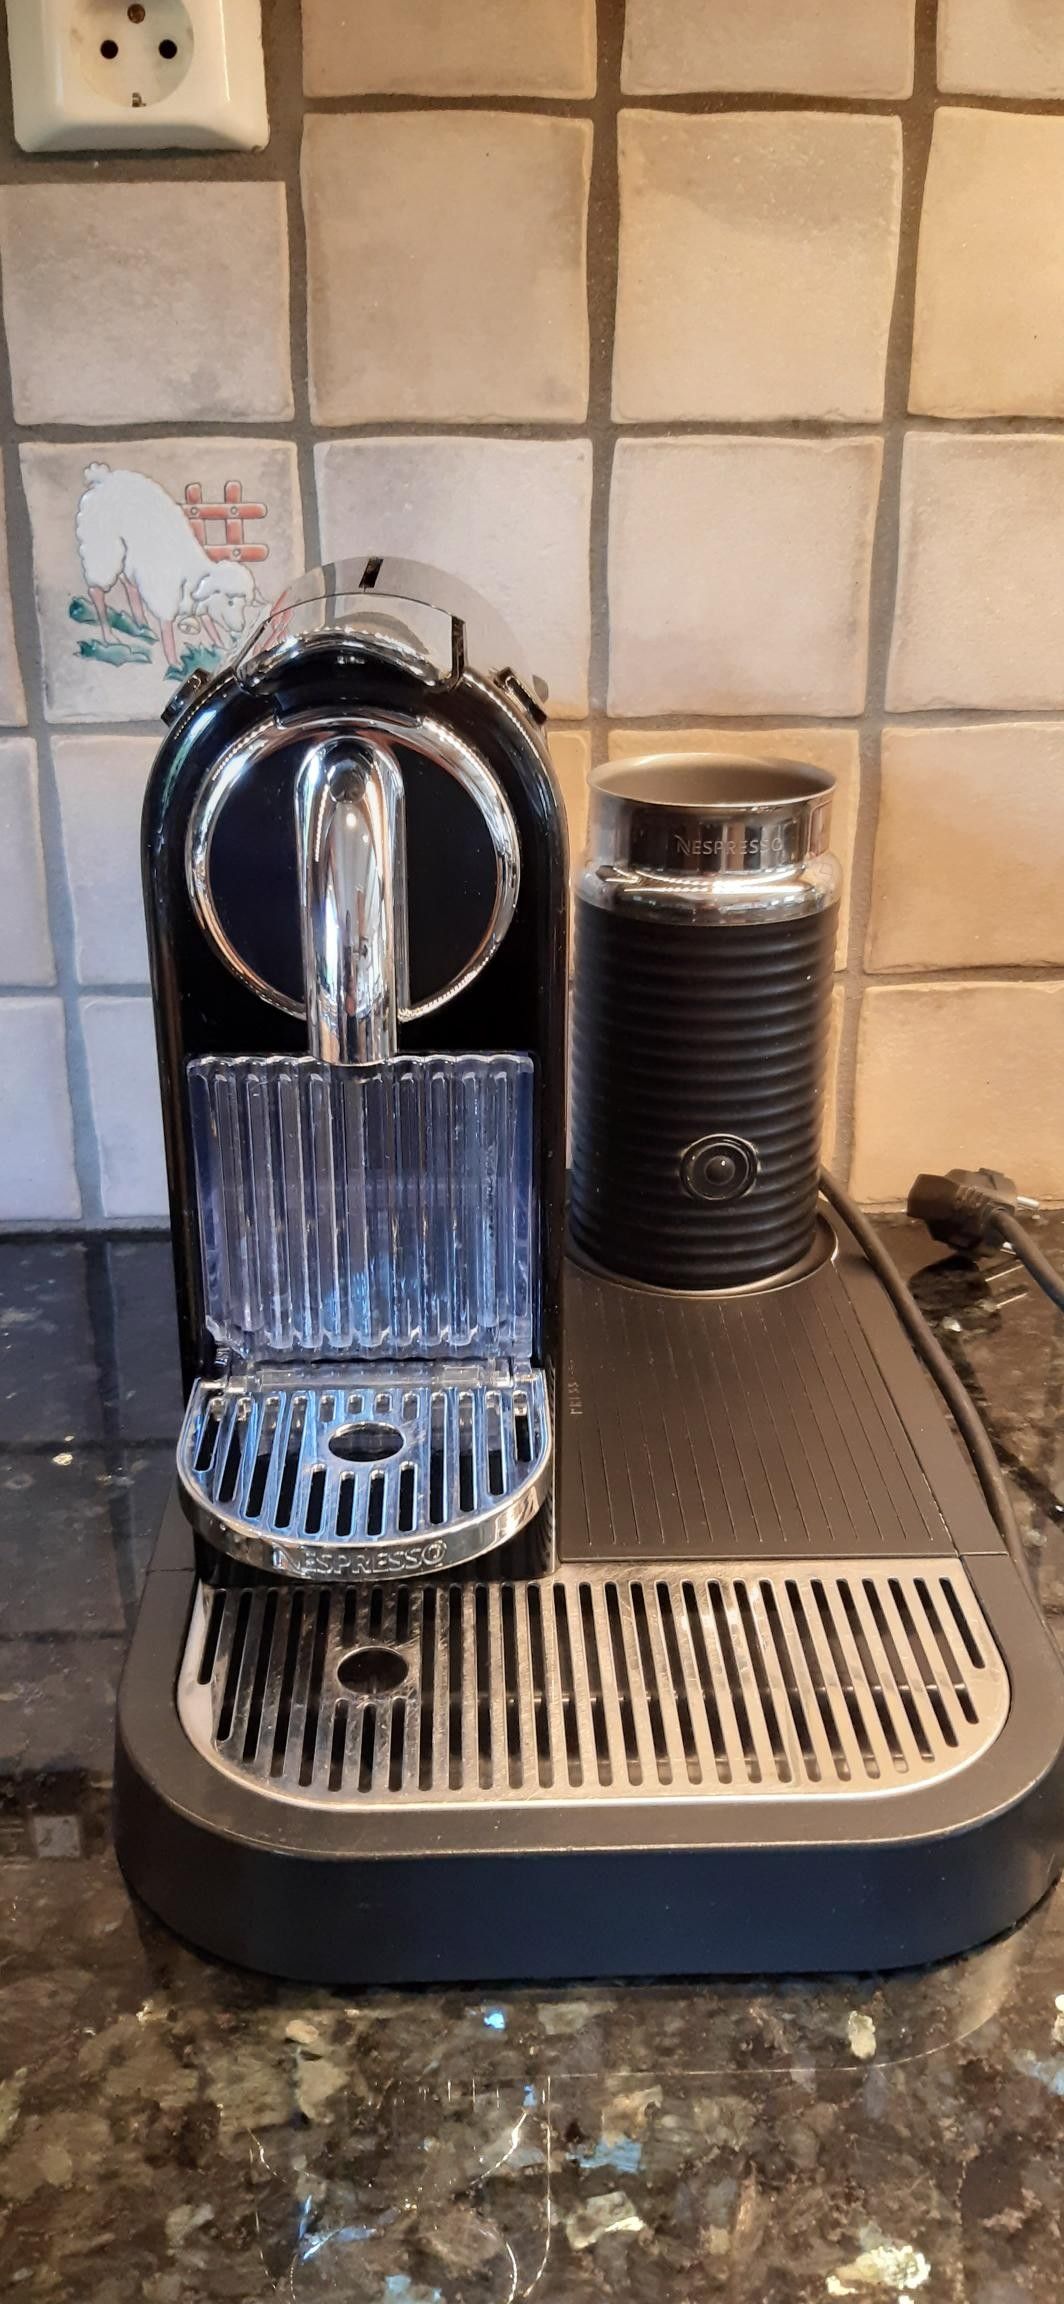 Alice læbe Ekspression Nespresso kaffemaskin | FINN torget